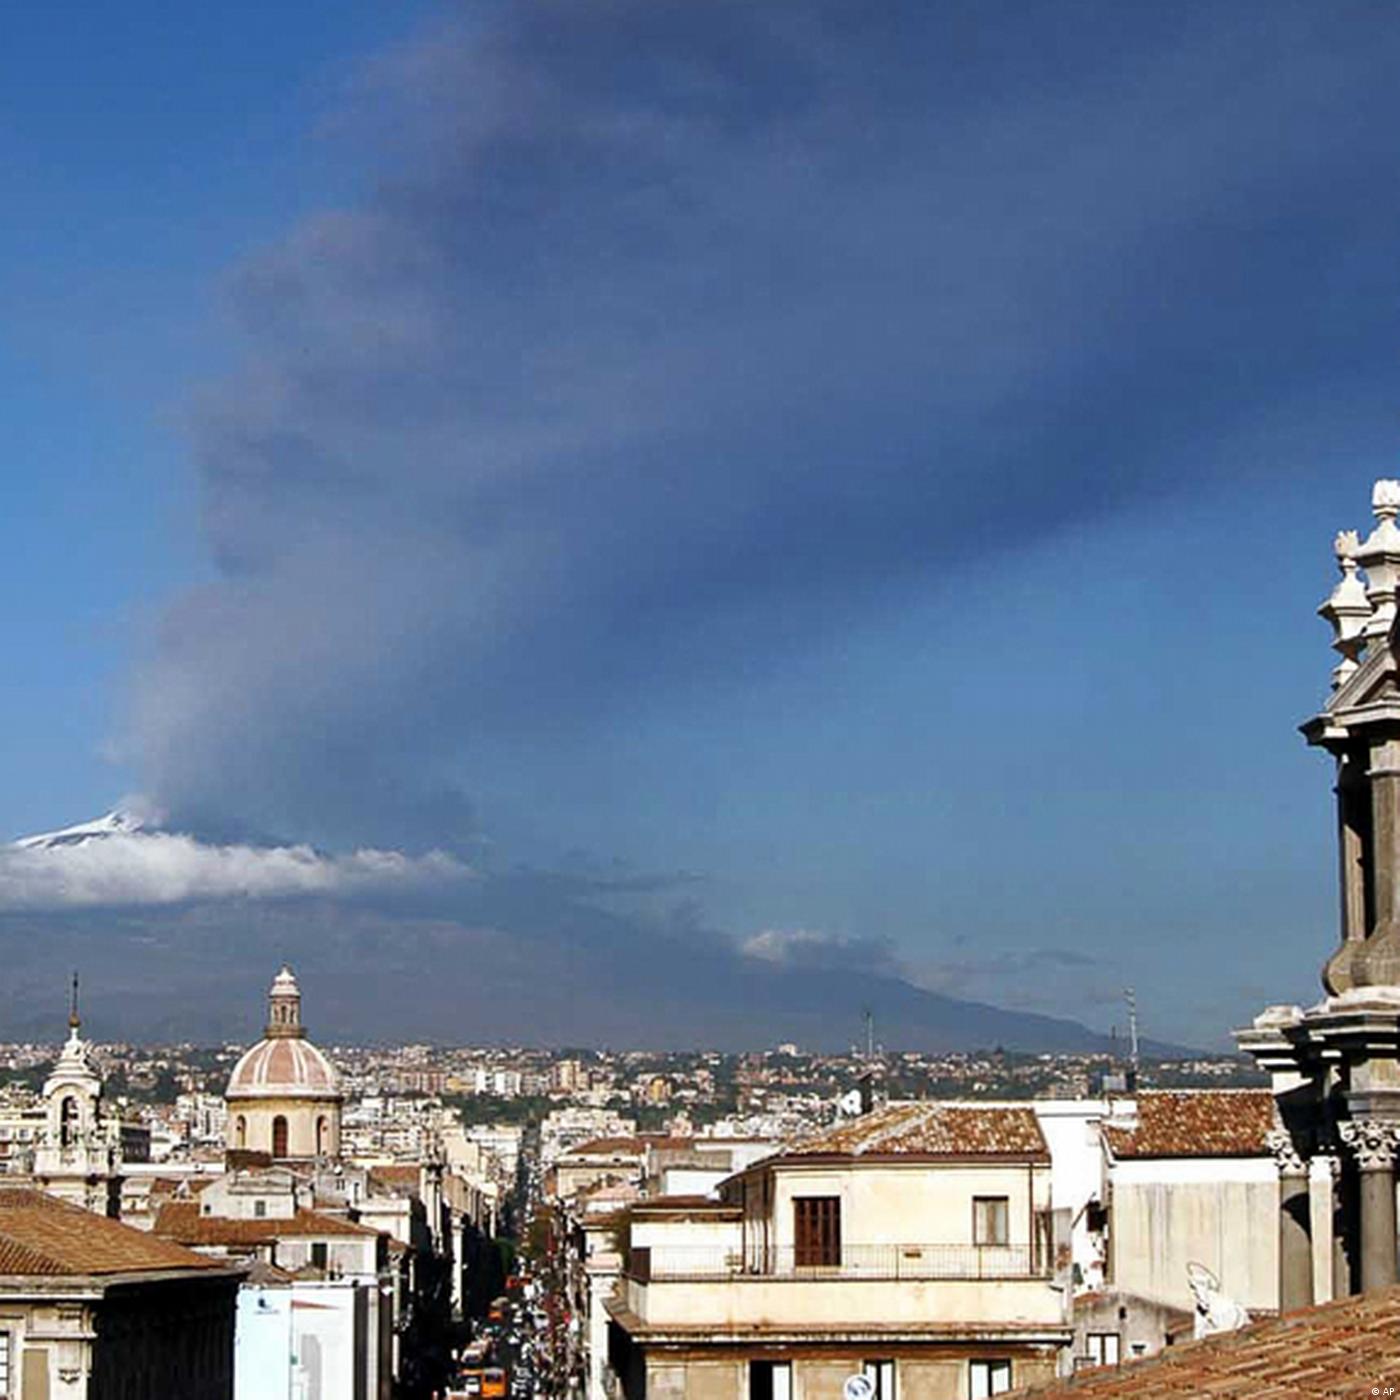 Italy: Europe's Mightiest Volcano